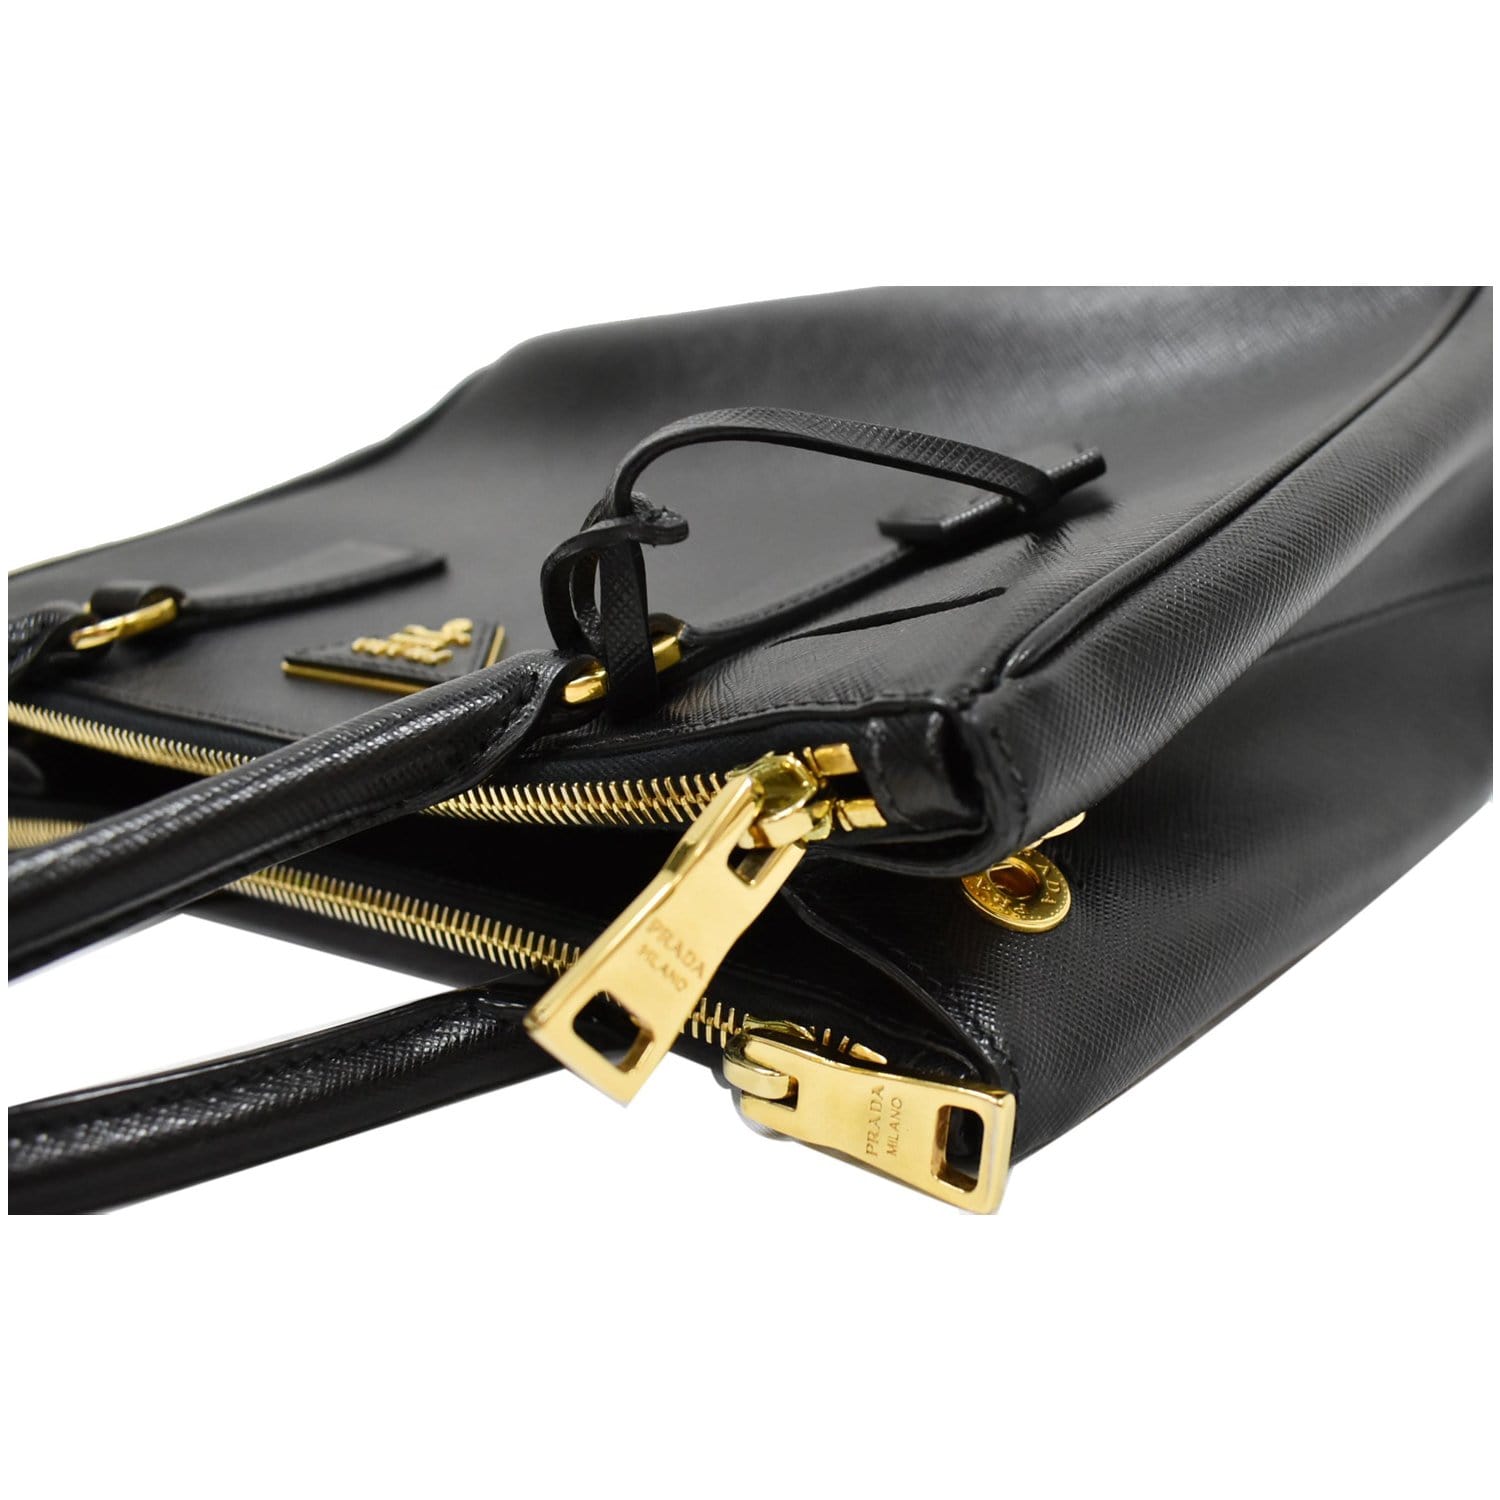 Prada Small Galleria Saffiano Leather Bag